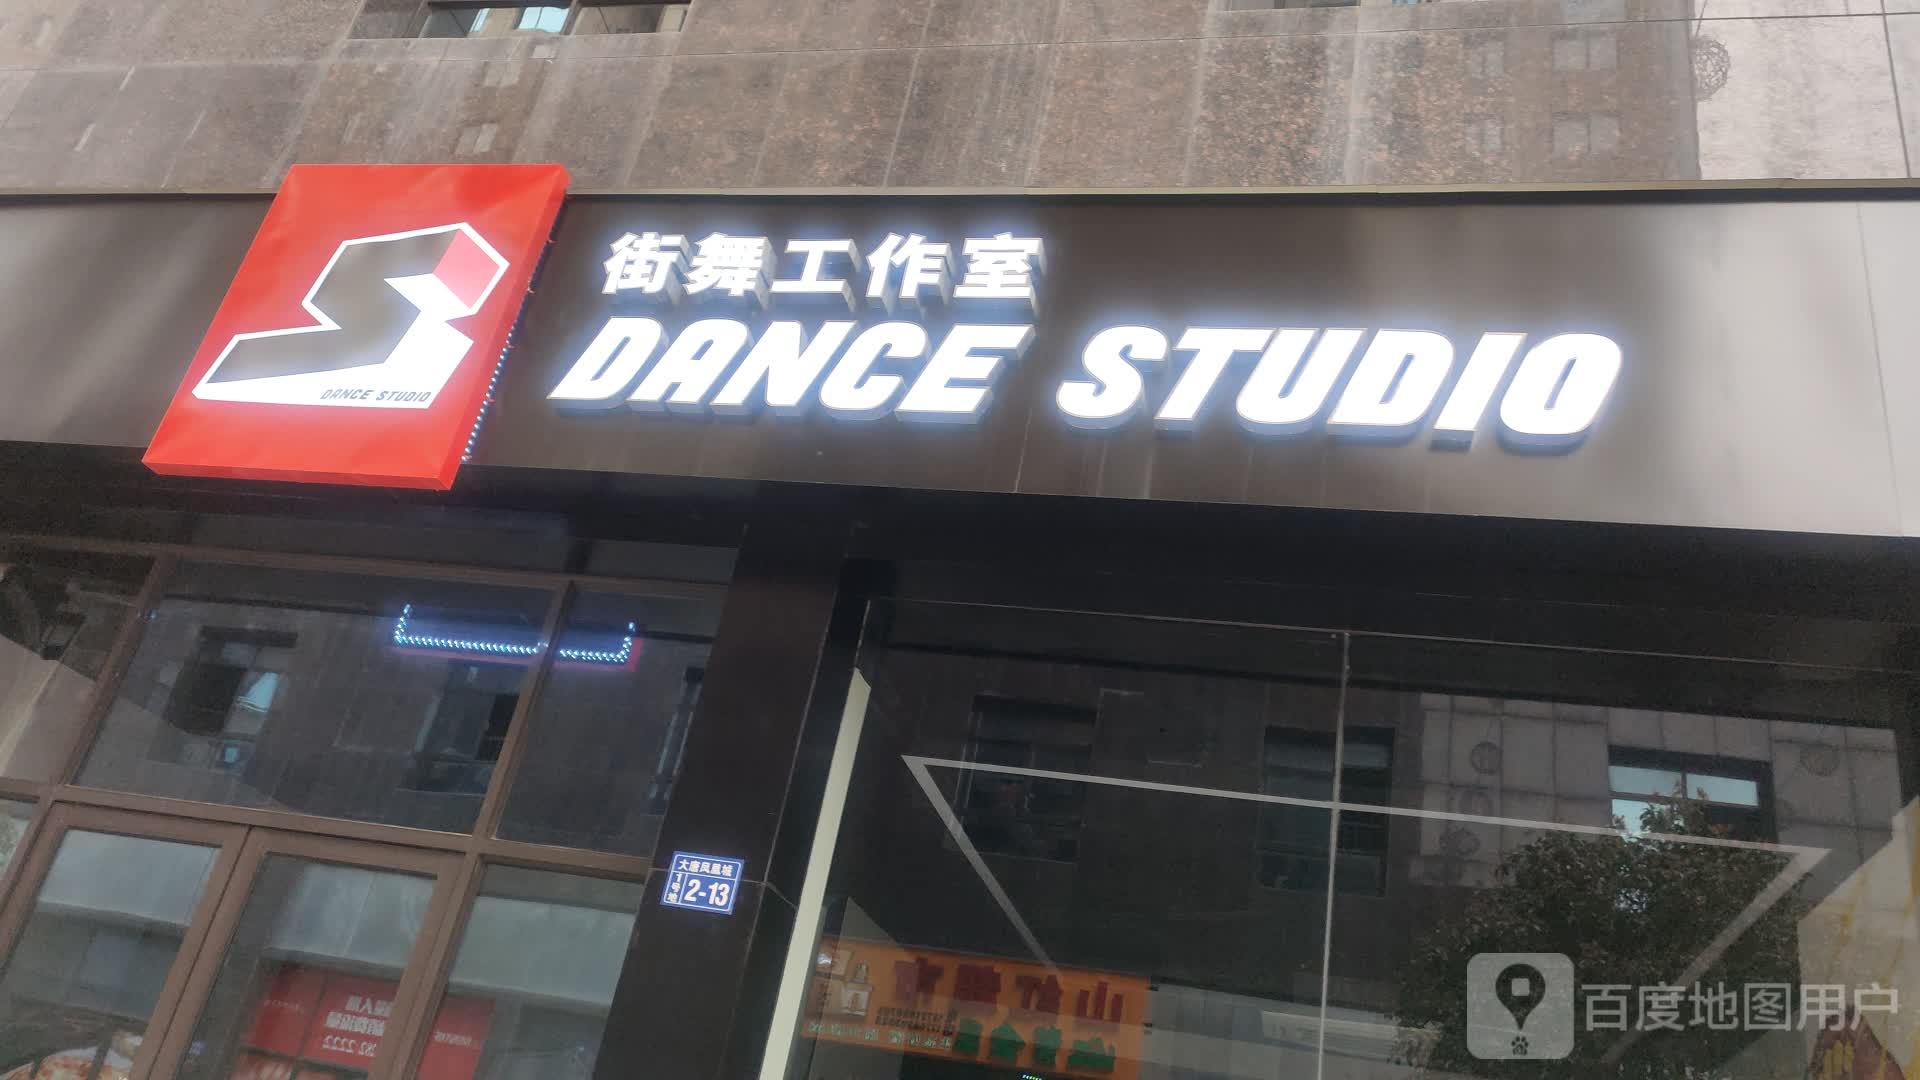 S街舞工作室